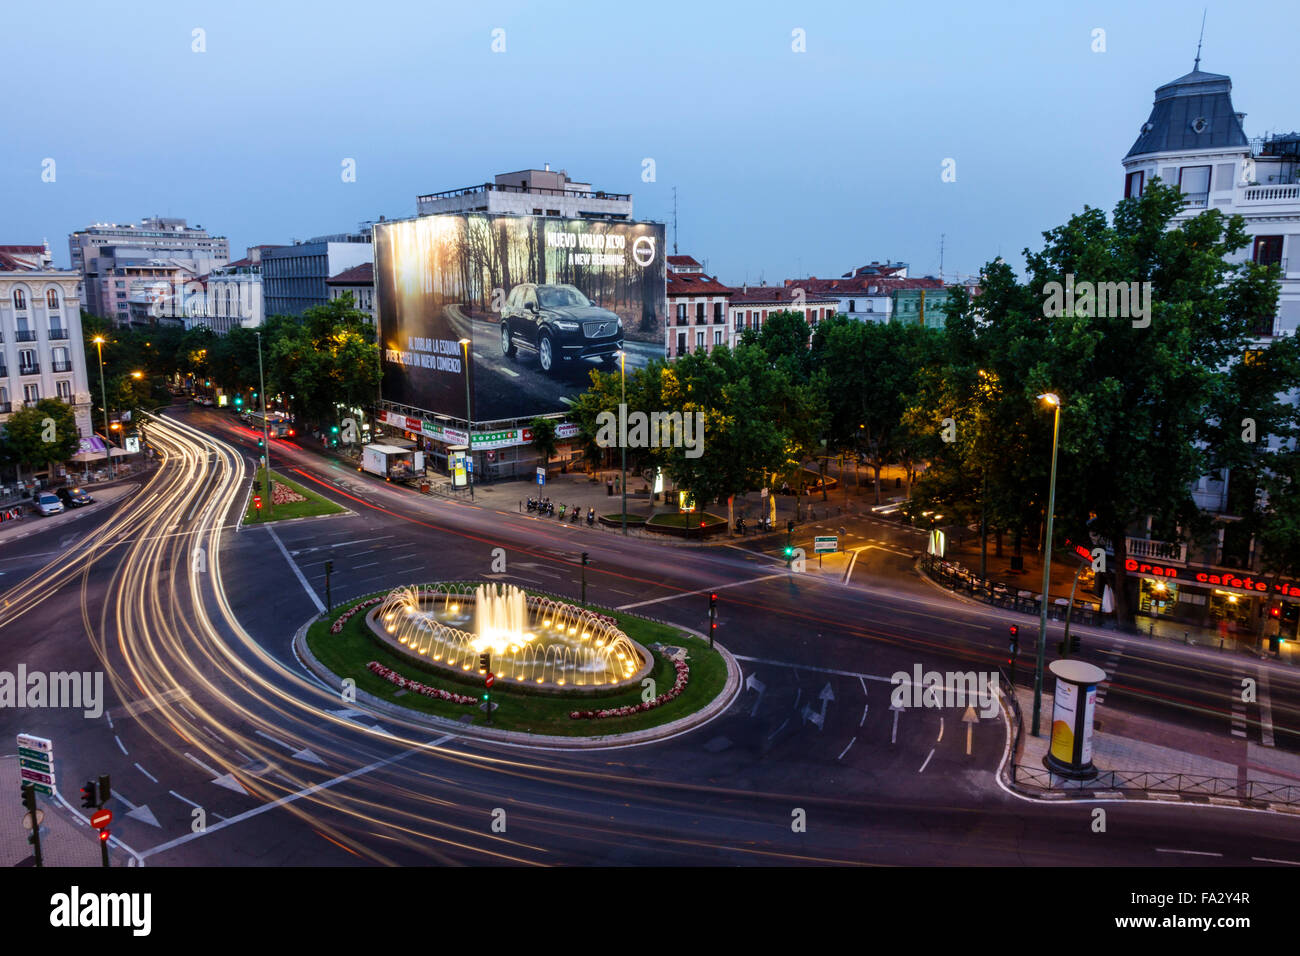 Madrid Spain,Hispanic Centro,Chamberi,Plaza Alonzo Martinez,dusk,night evening,time exposure,traffic circle,fountain,lighted,Spain150706103 Stock Photo